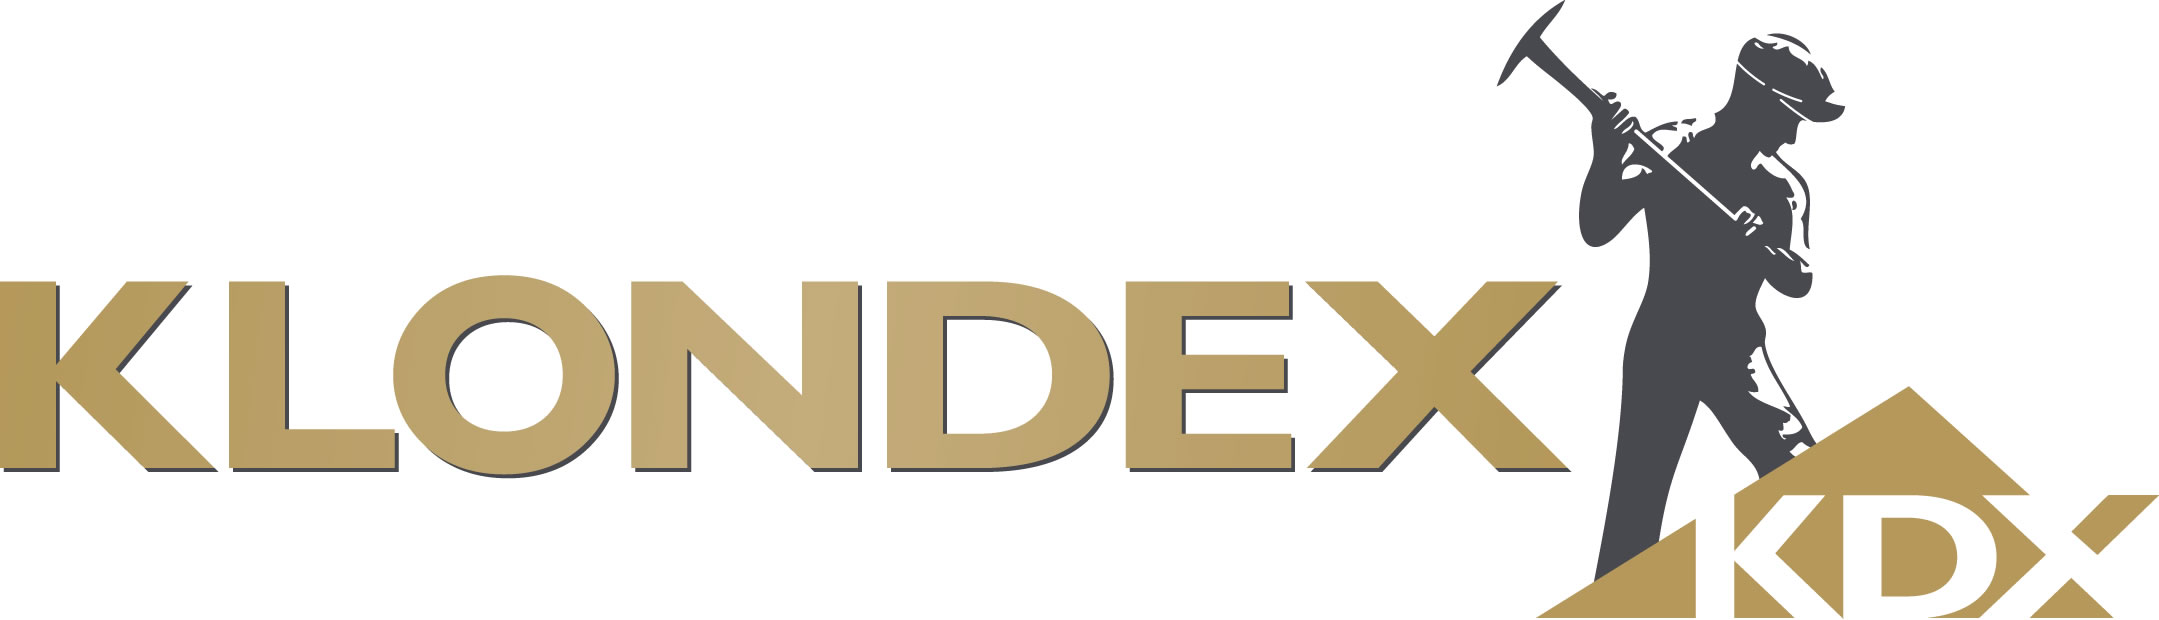 Klondex Announces Pr